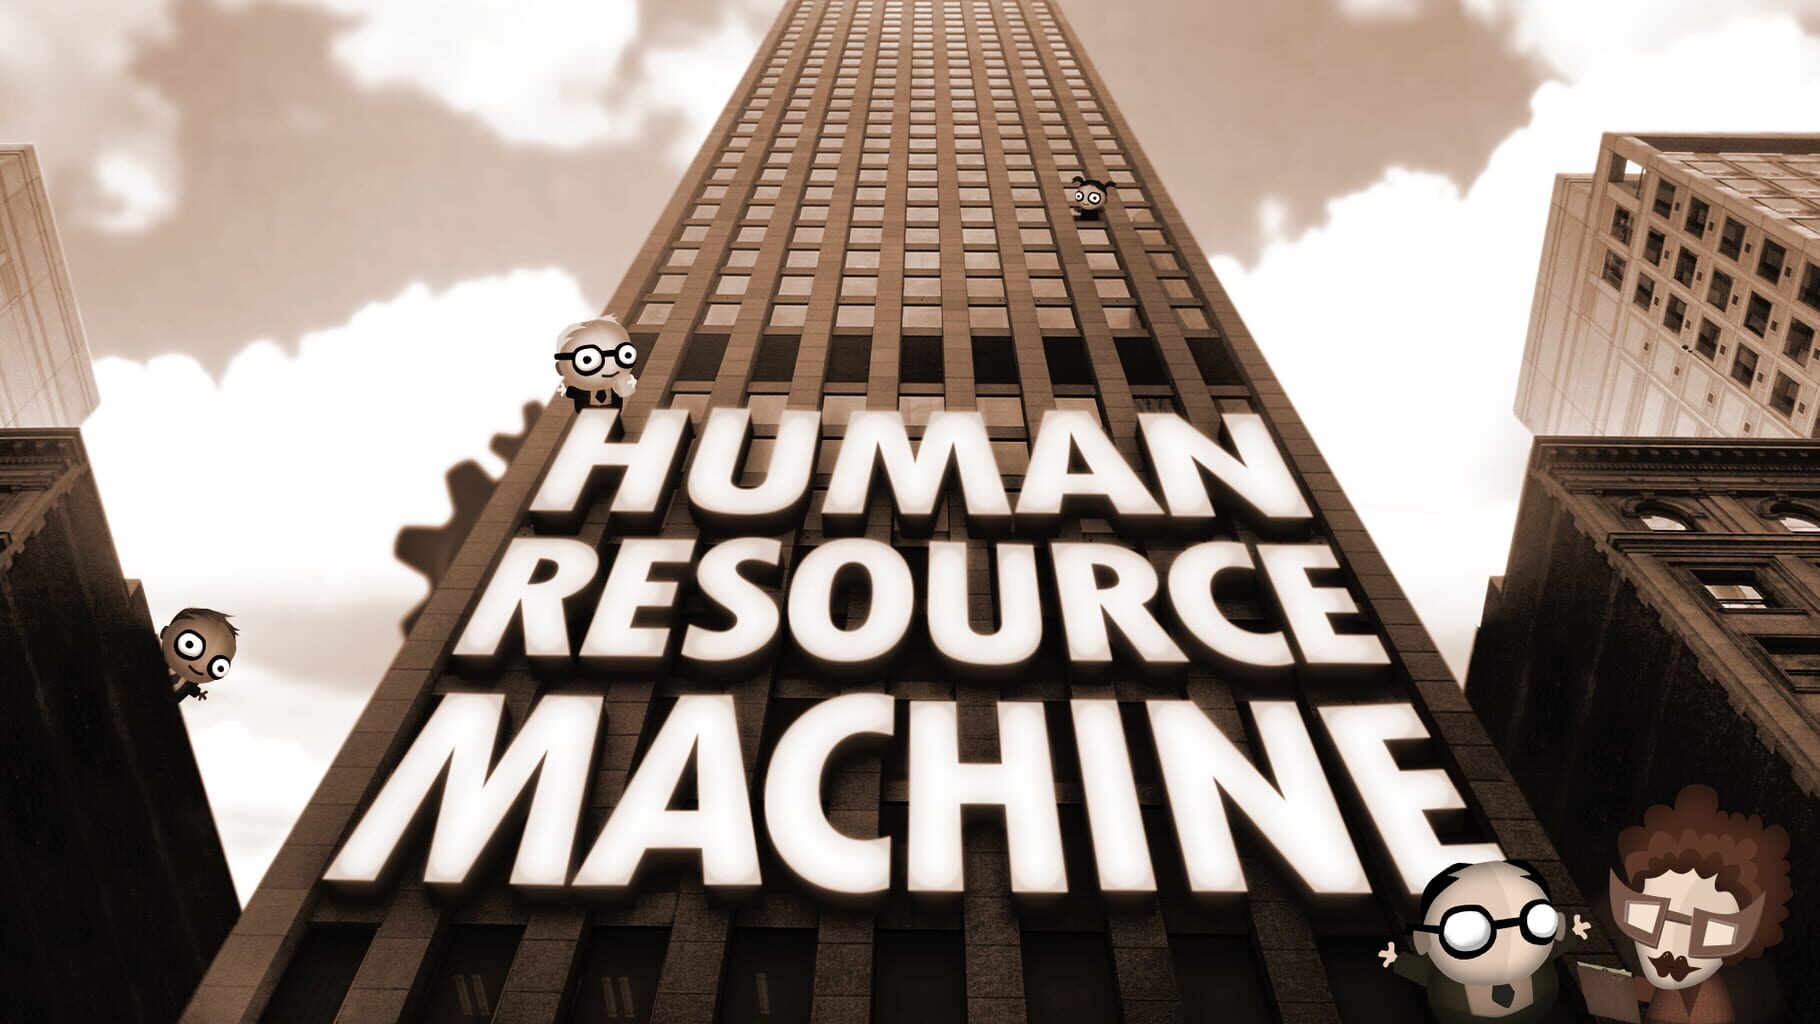 Arte - Human Resource Machine